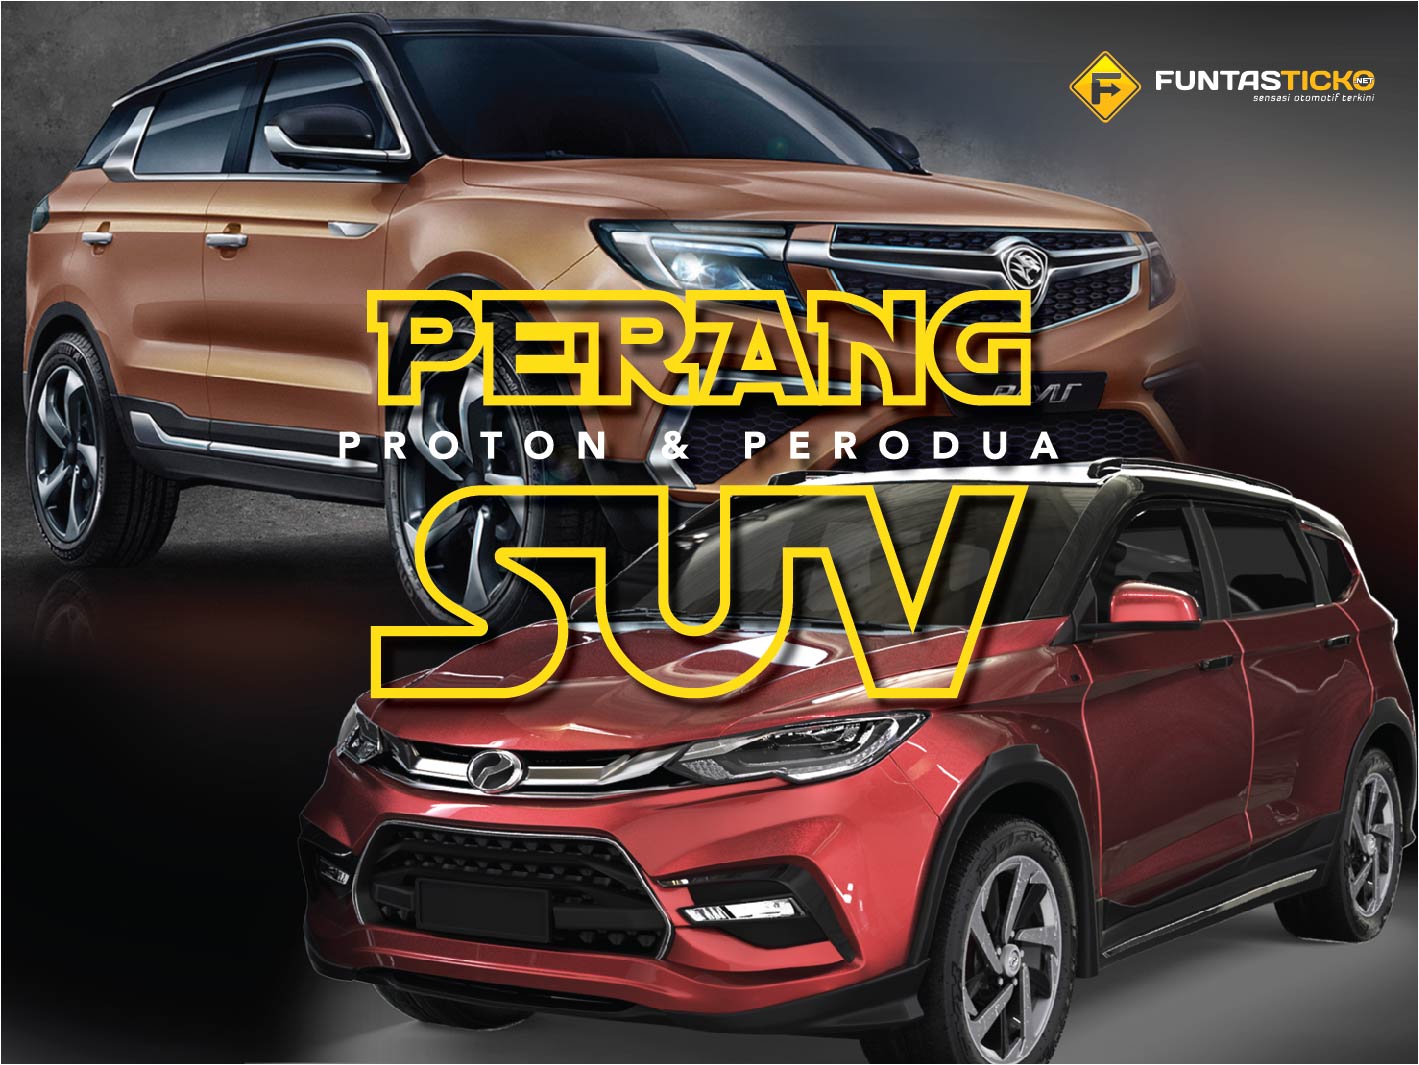 Perang SUV 2018 - Proton vs Perodua  funtasticko.net